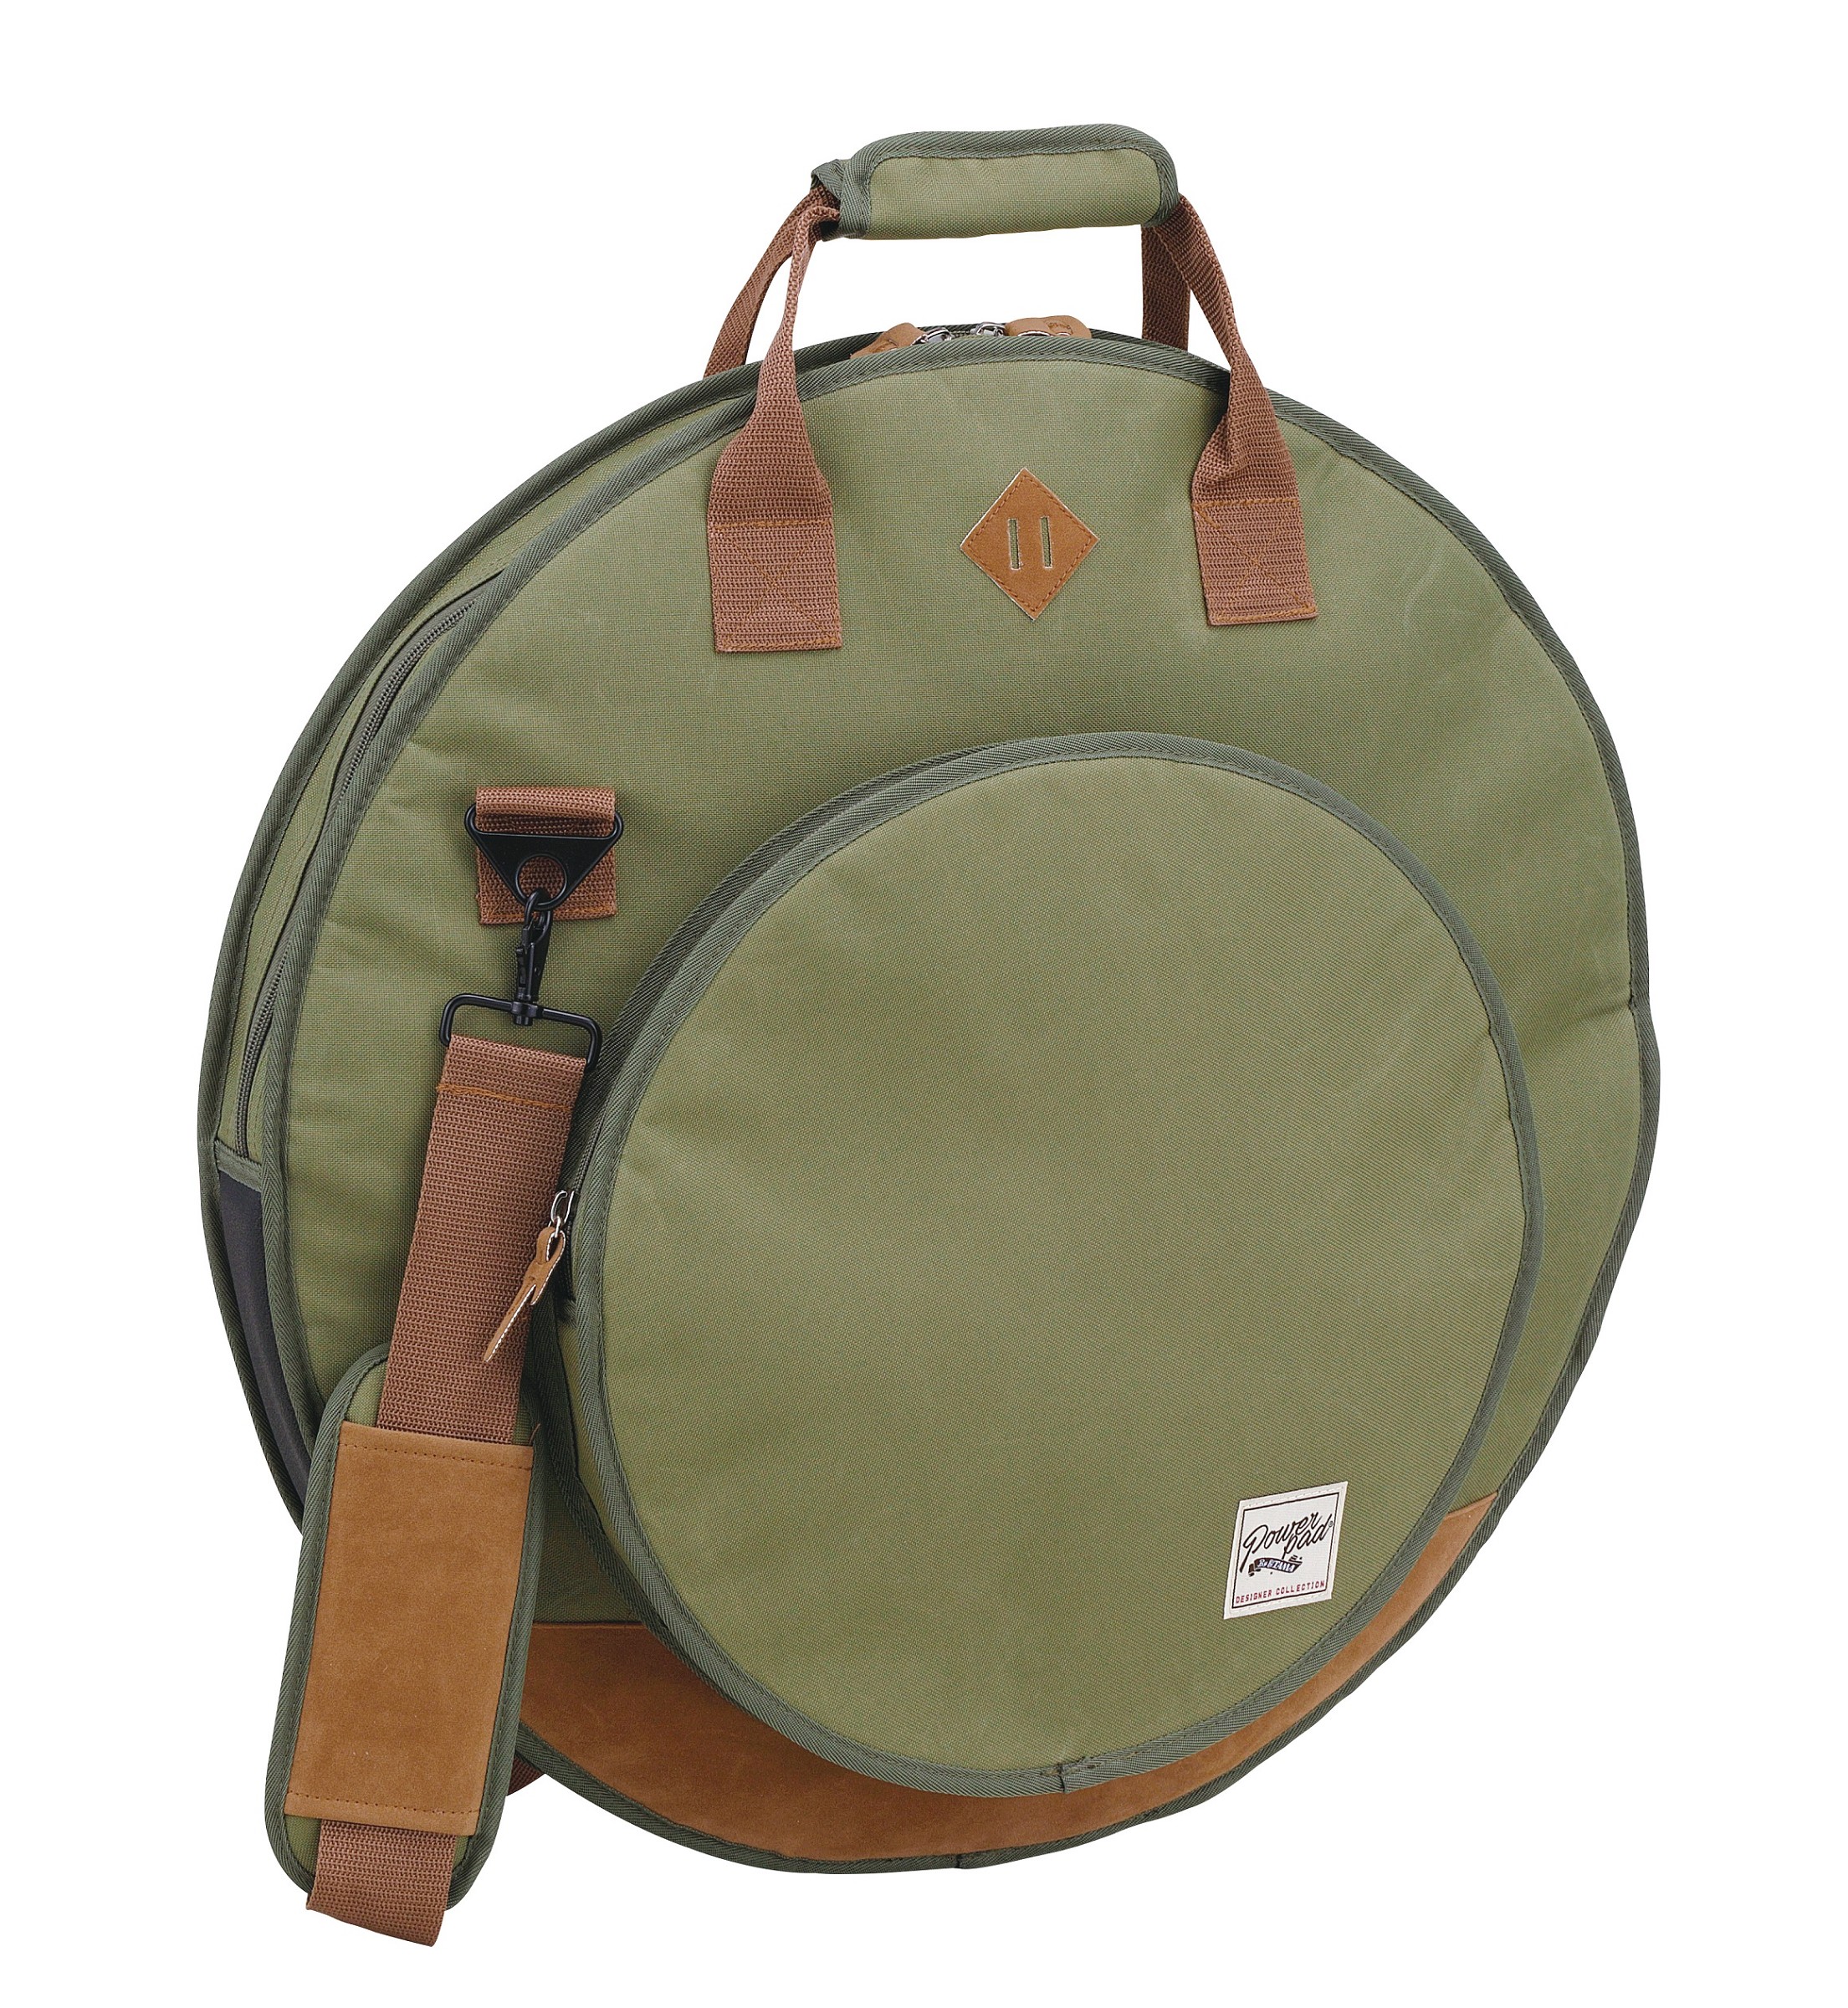 Tama TCB22MG Cymbal Bag Designer Collection Moss Green